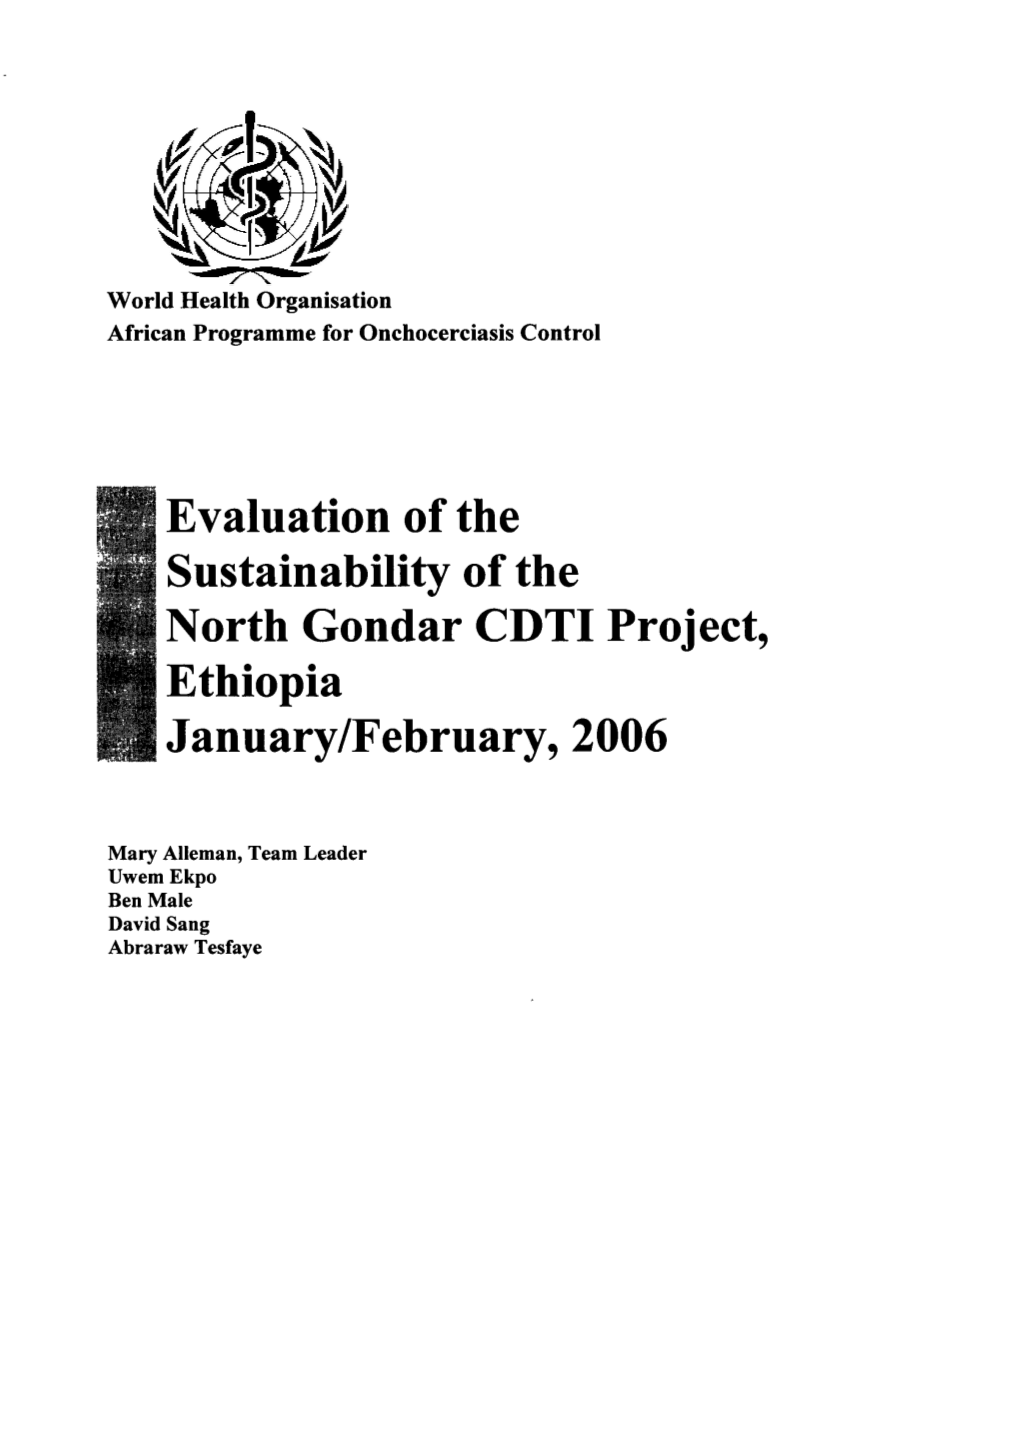 Ethiopia Janu Aryleebru Ùry, 2006